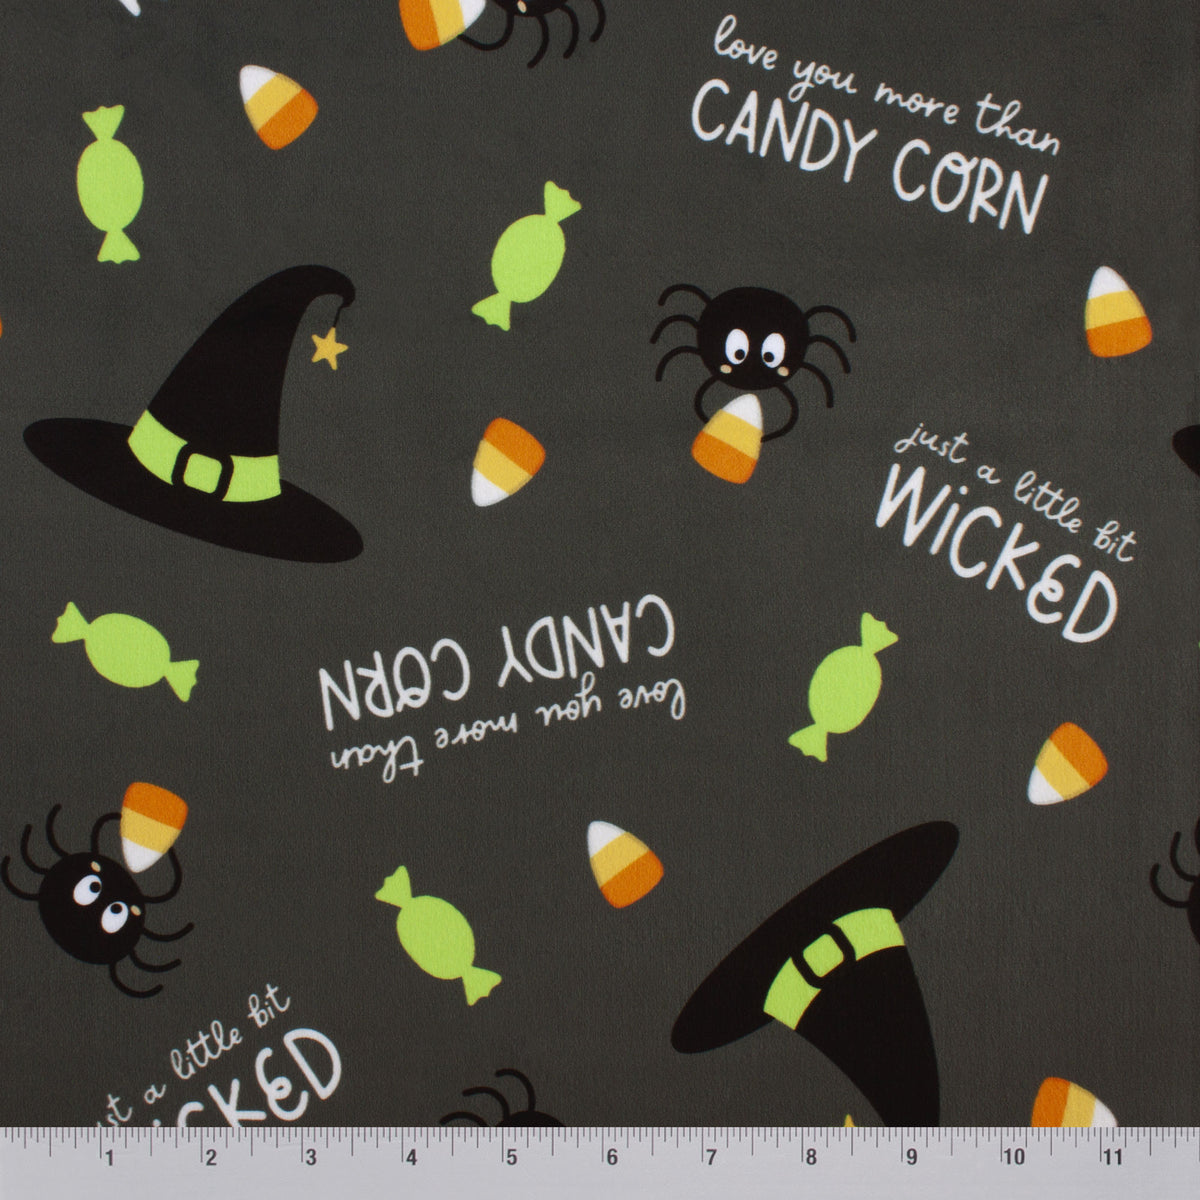 Wicked Candy Corn | Hello Boo